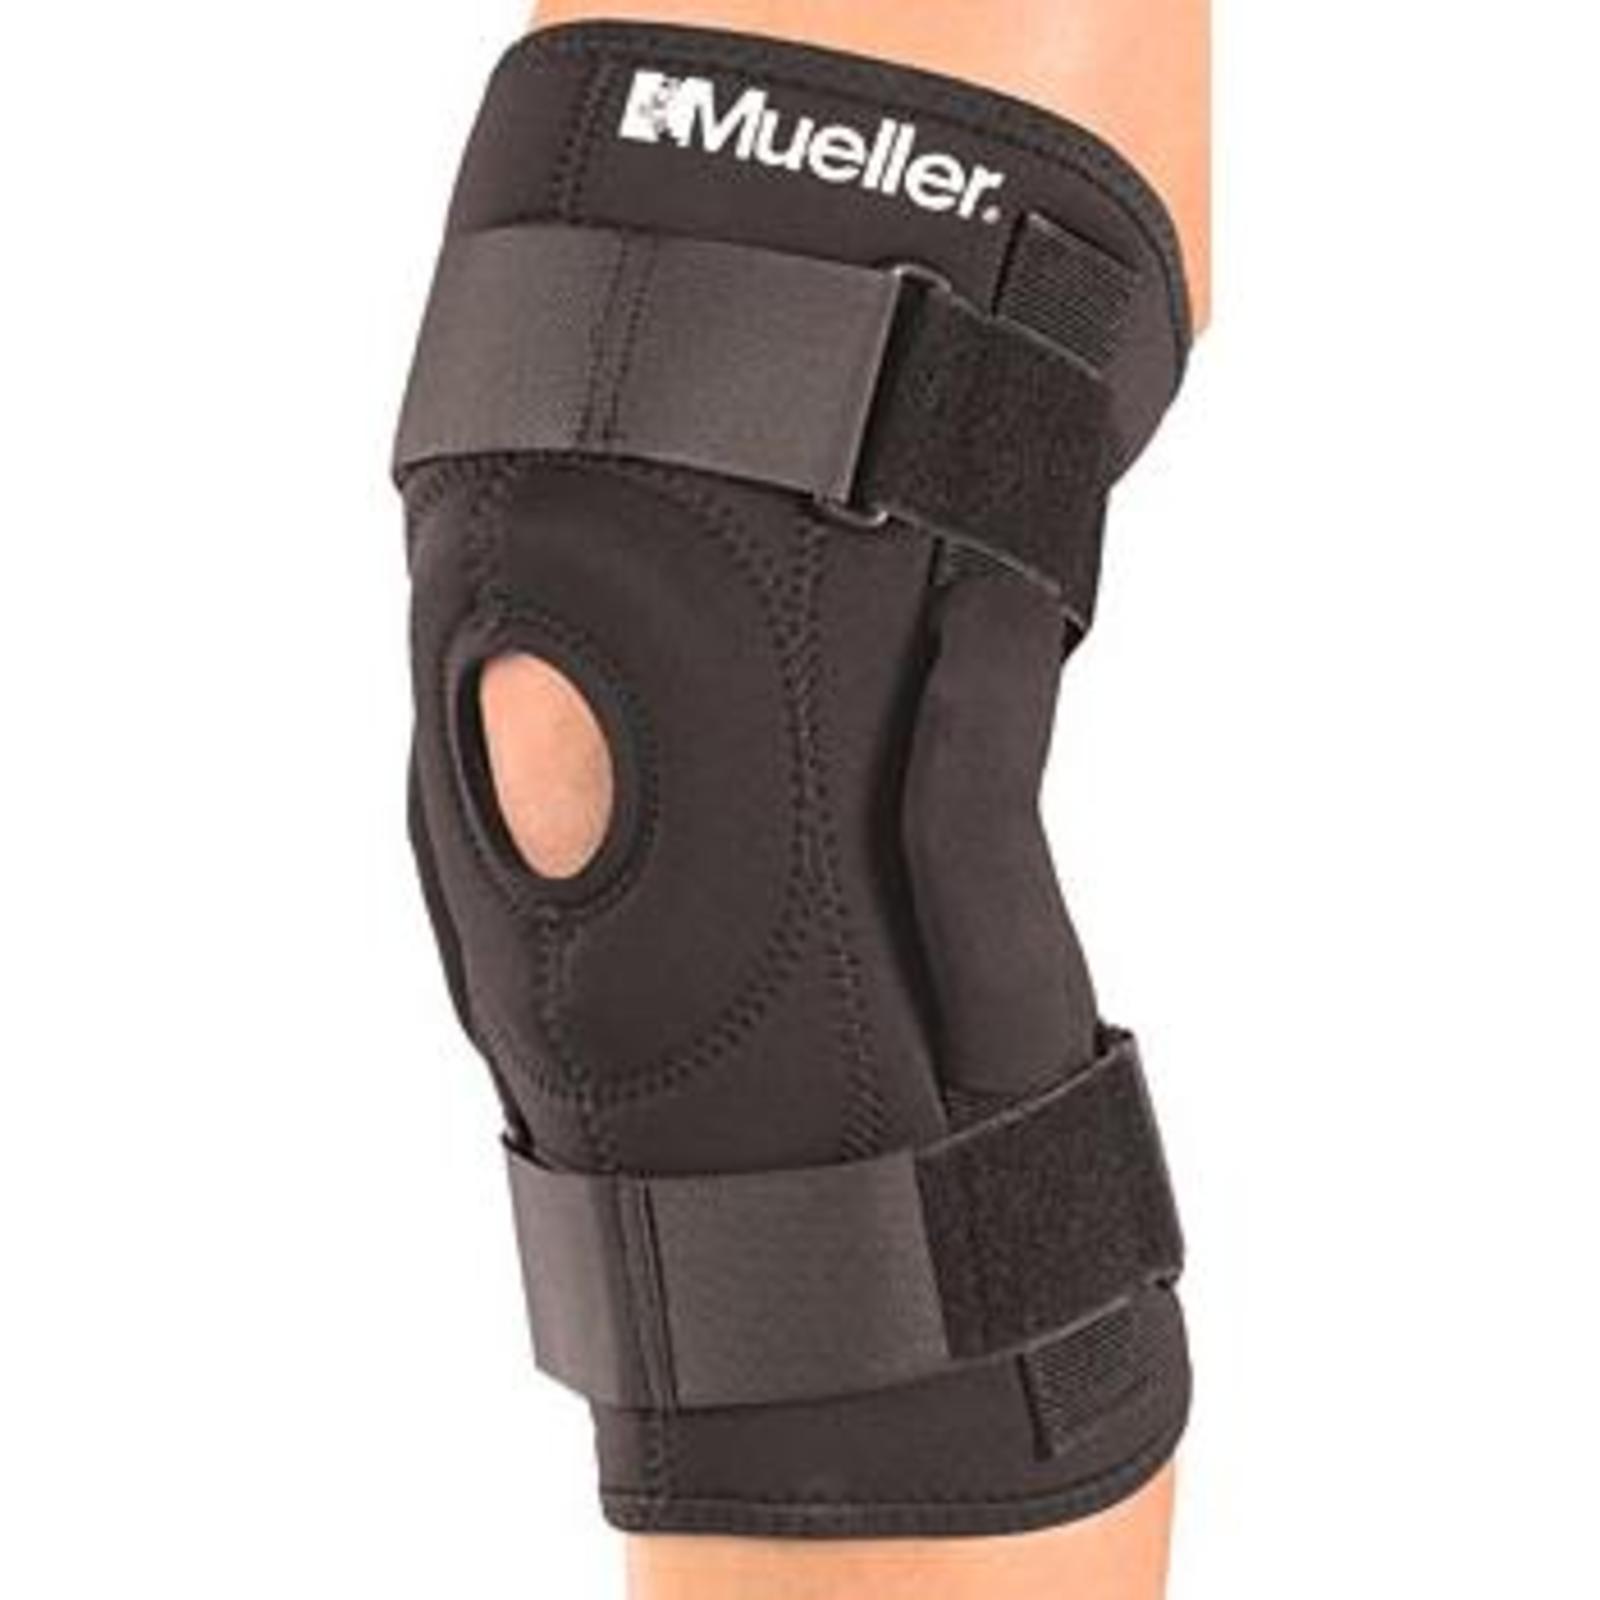 Mueller Hinged Knee brace - Medium